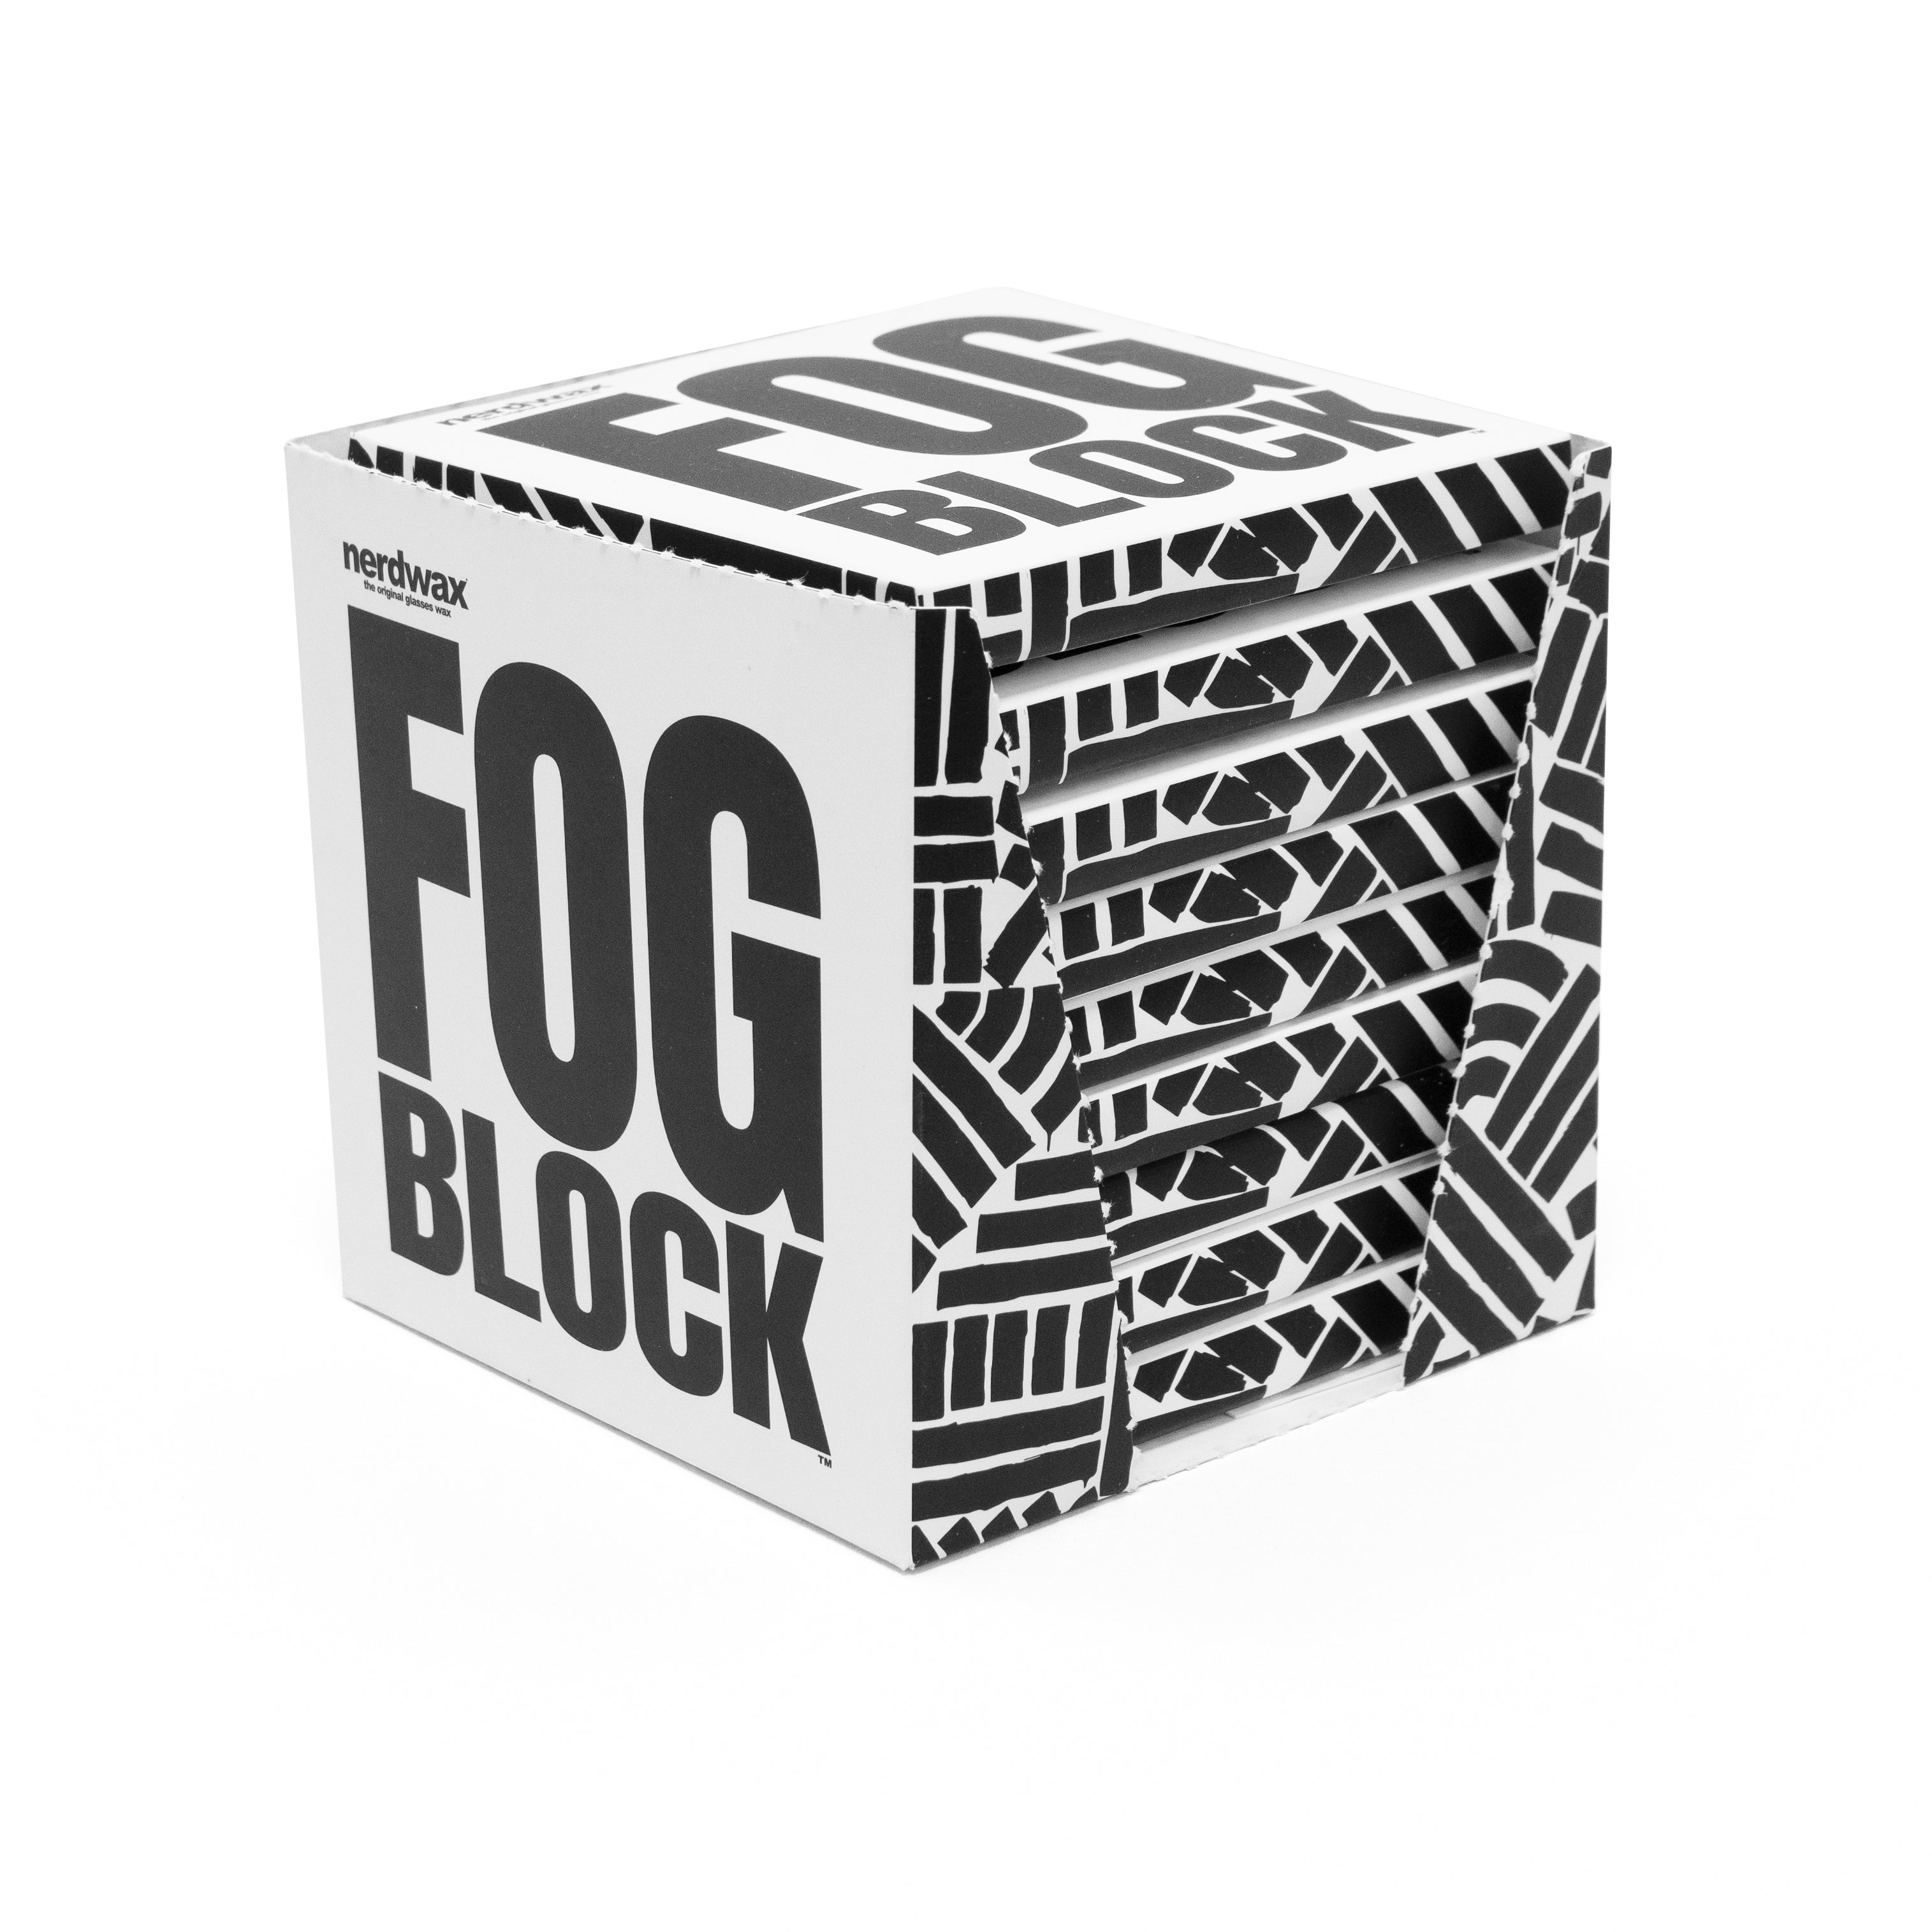 Nerdwax Fog Block Microfiber Cloth - Shop Eyewear & Accessories at H-E-B